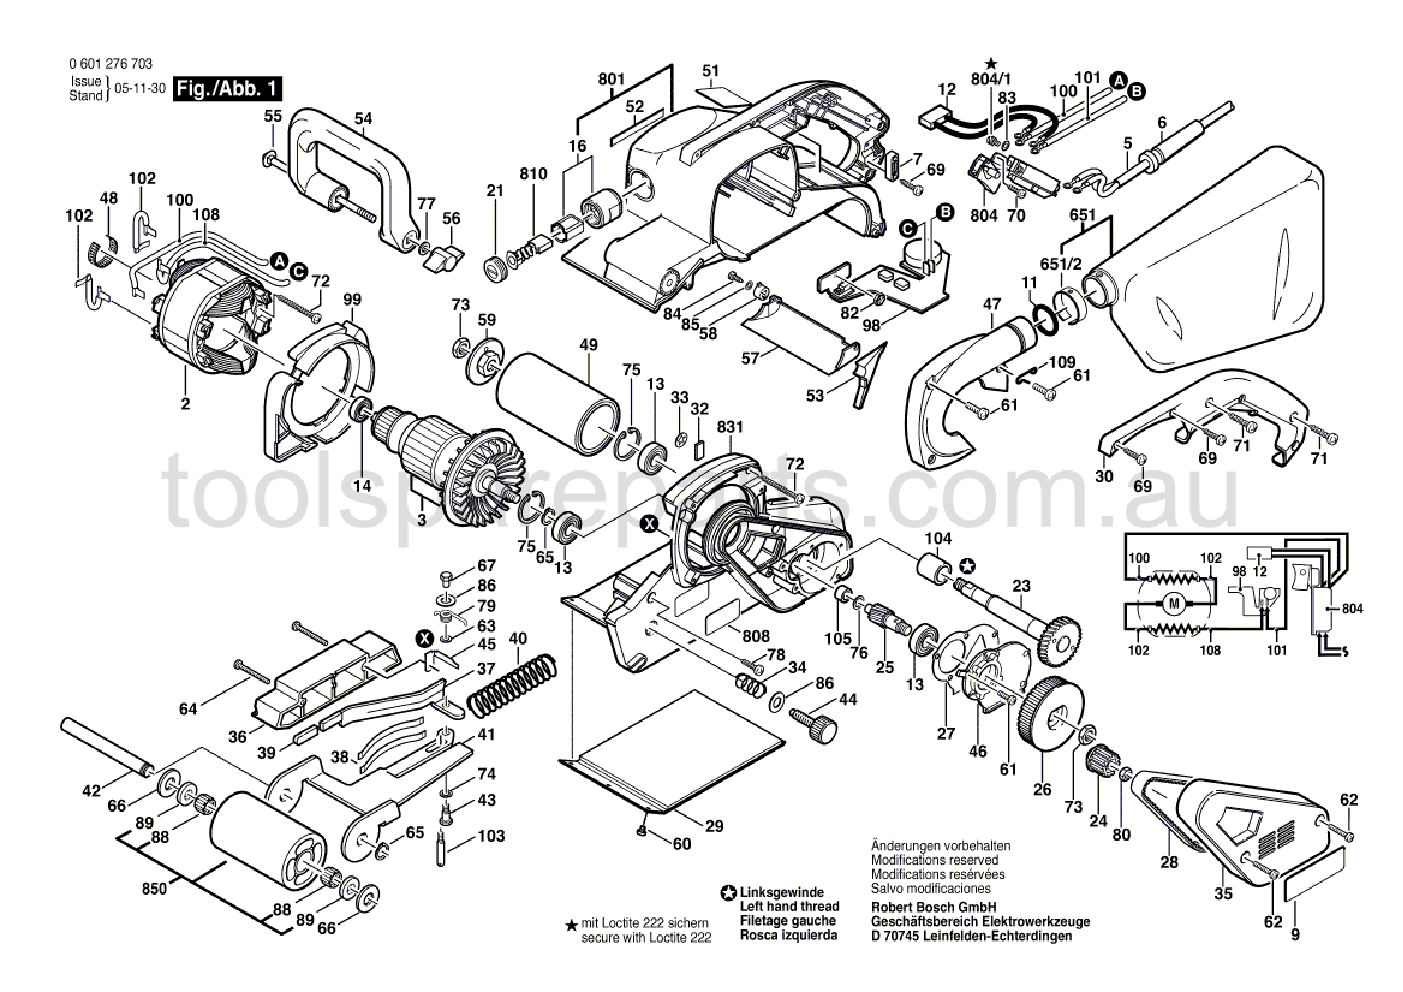 Bosch GBS 100 AE 0601276737  Diagram 1